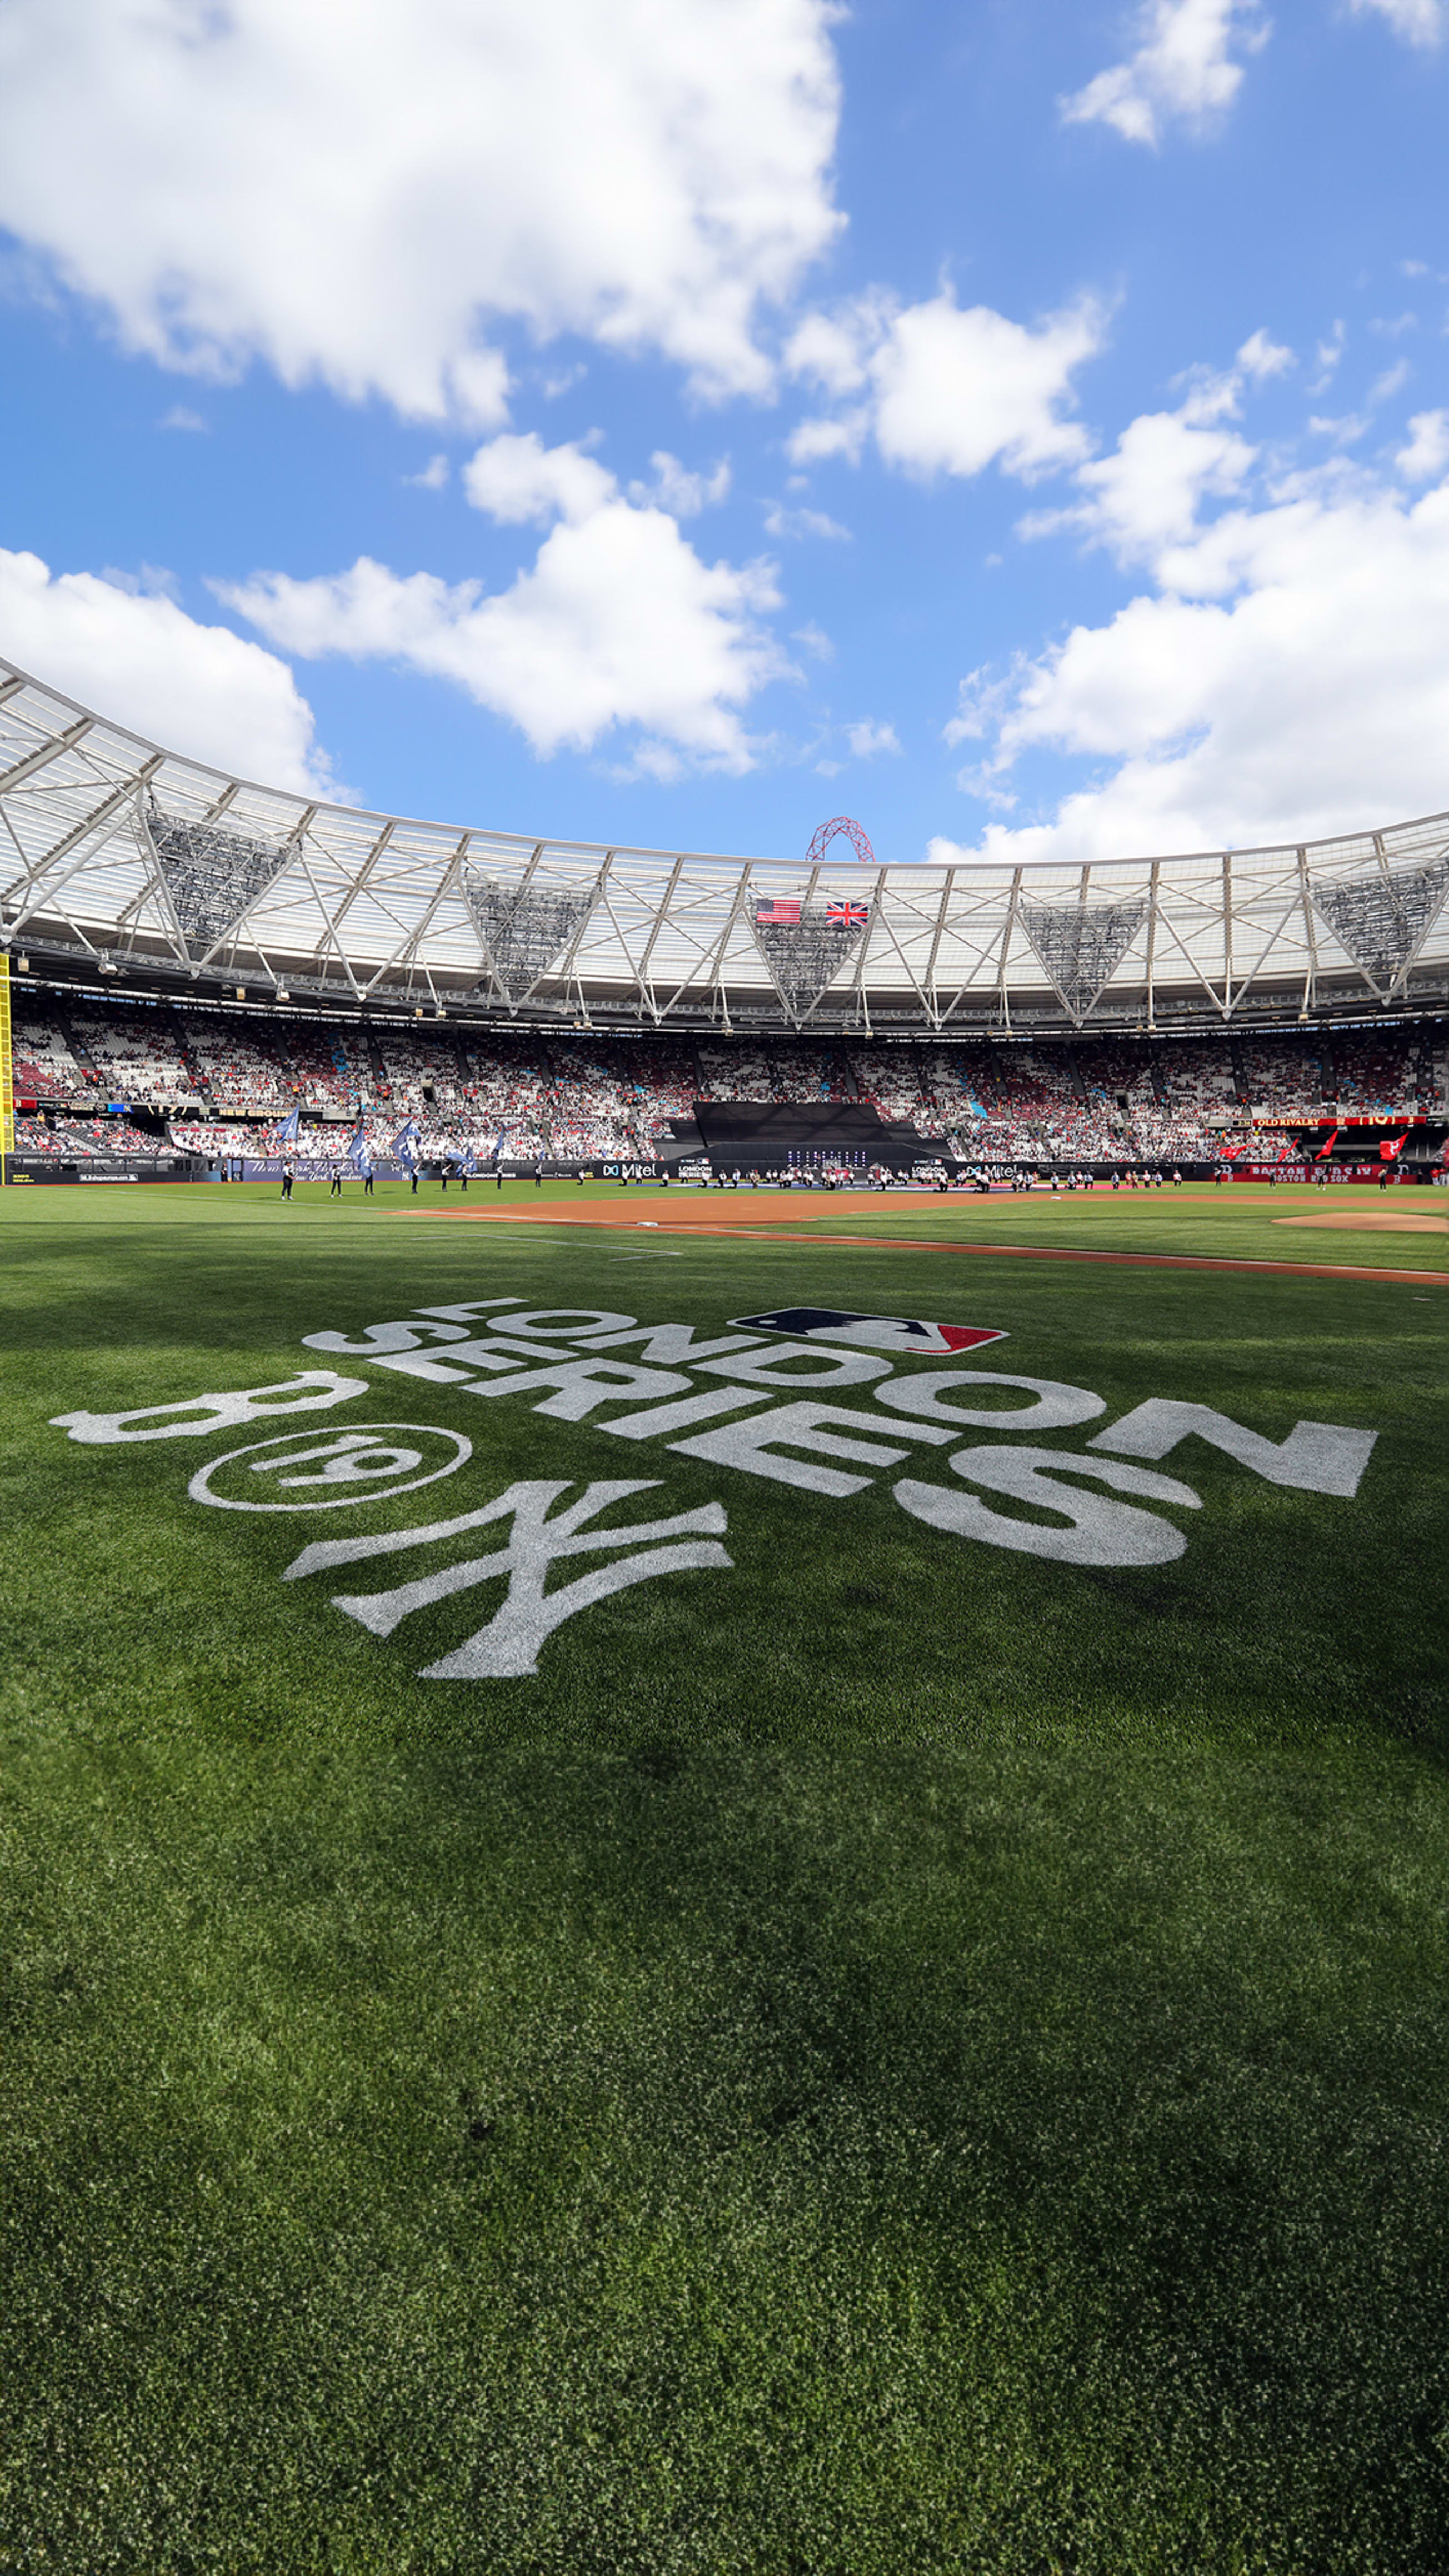 Michael Chavis' 2 Home Run Game (6 RBI) in London!, June 29, 2019